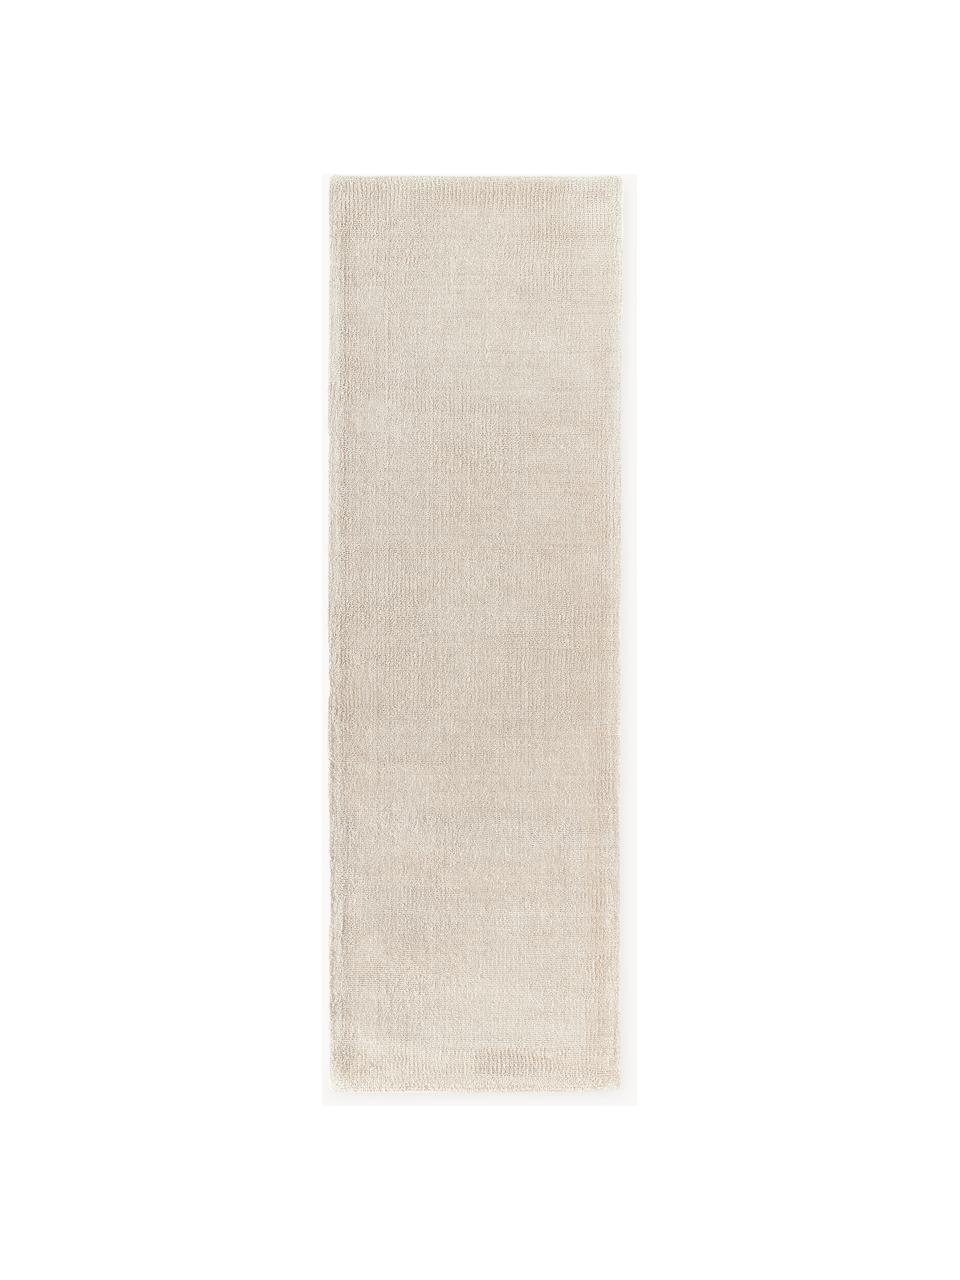 Handgewebter Kurzflor-Läufer Ainsley, 60 % Polyester, GRS-zertifiziert
40 % Wolle, Hellbeige, B 80 x L 200 cm